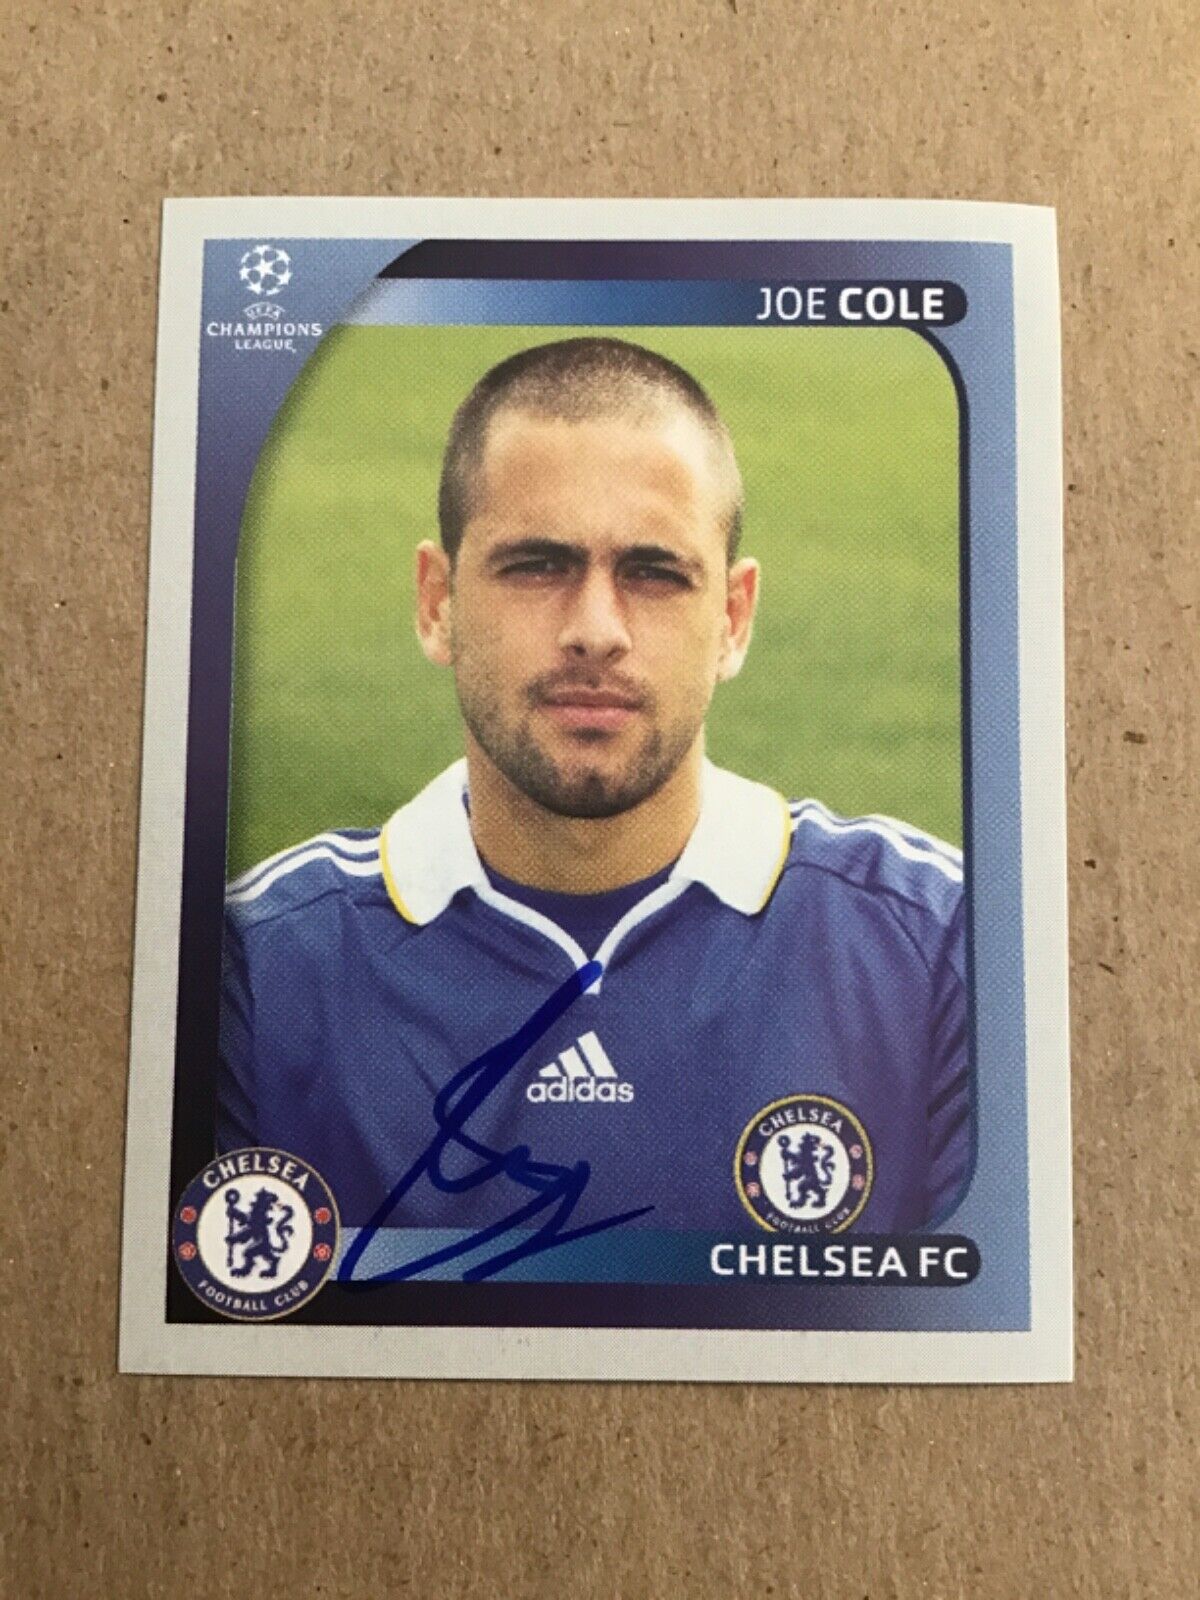 Joe Cole, England 🏴󠁧󠁢󠁥󠁮󠁧󠁿 Chelsea FC Panini CL 2008/09 hand signed